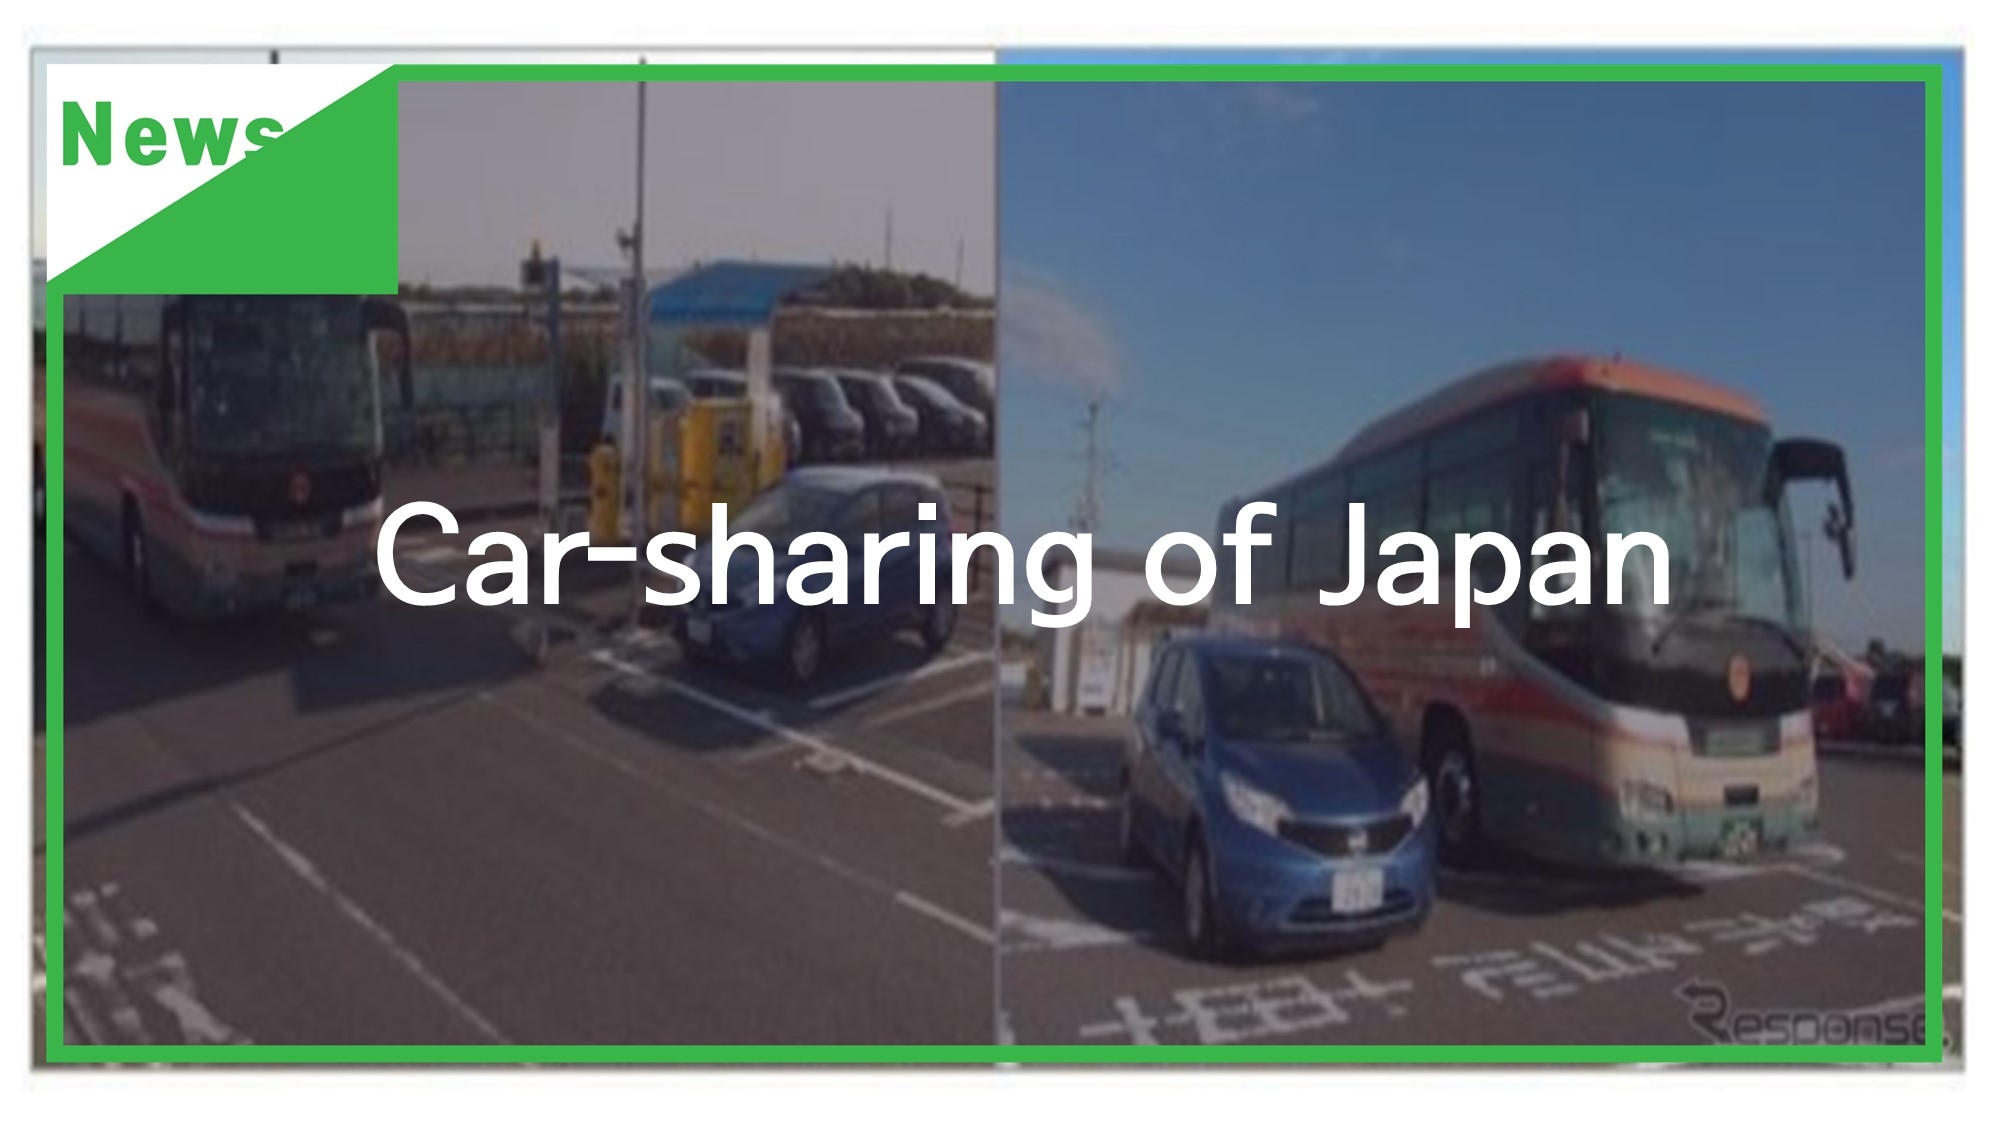 [Resources] Car-sharing of Japan